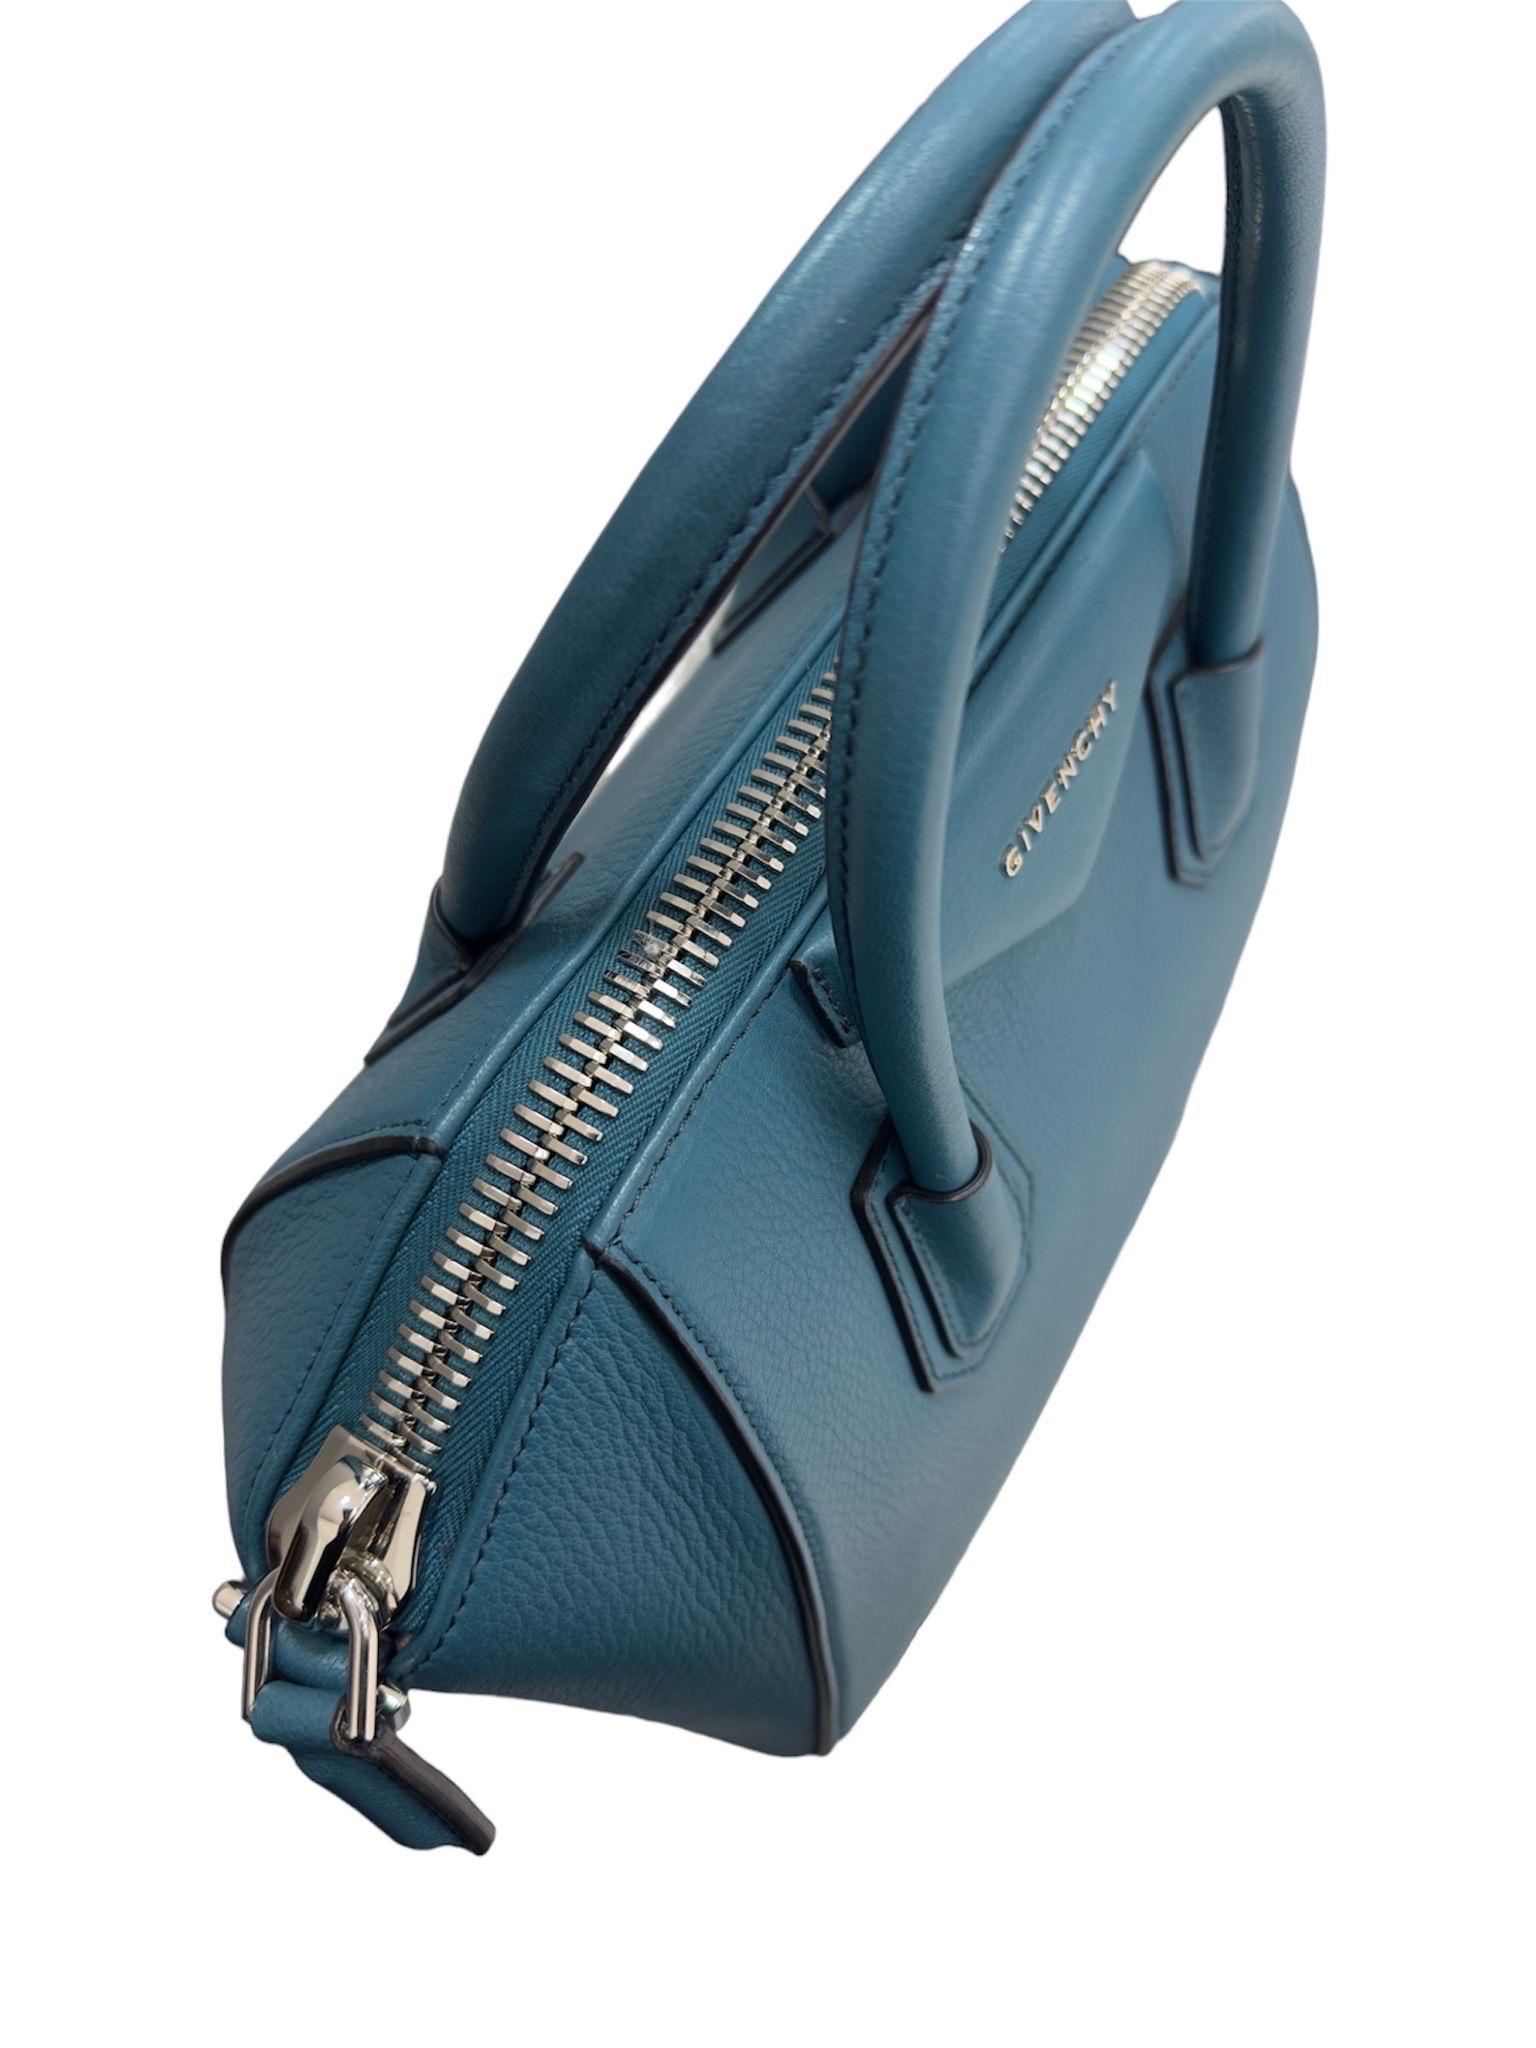 Givenchy Antigona Small Blu Petrolio Borsa A Spalla For Sale 1